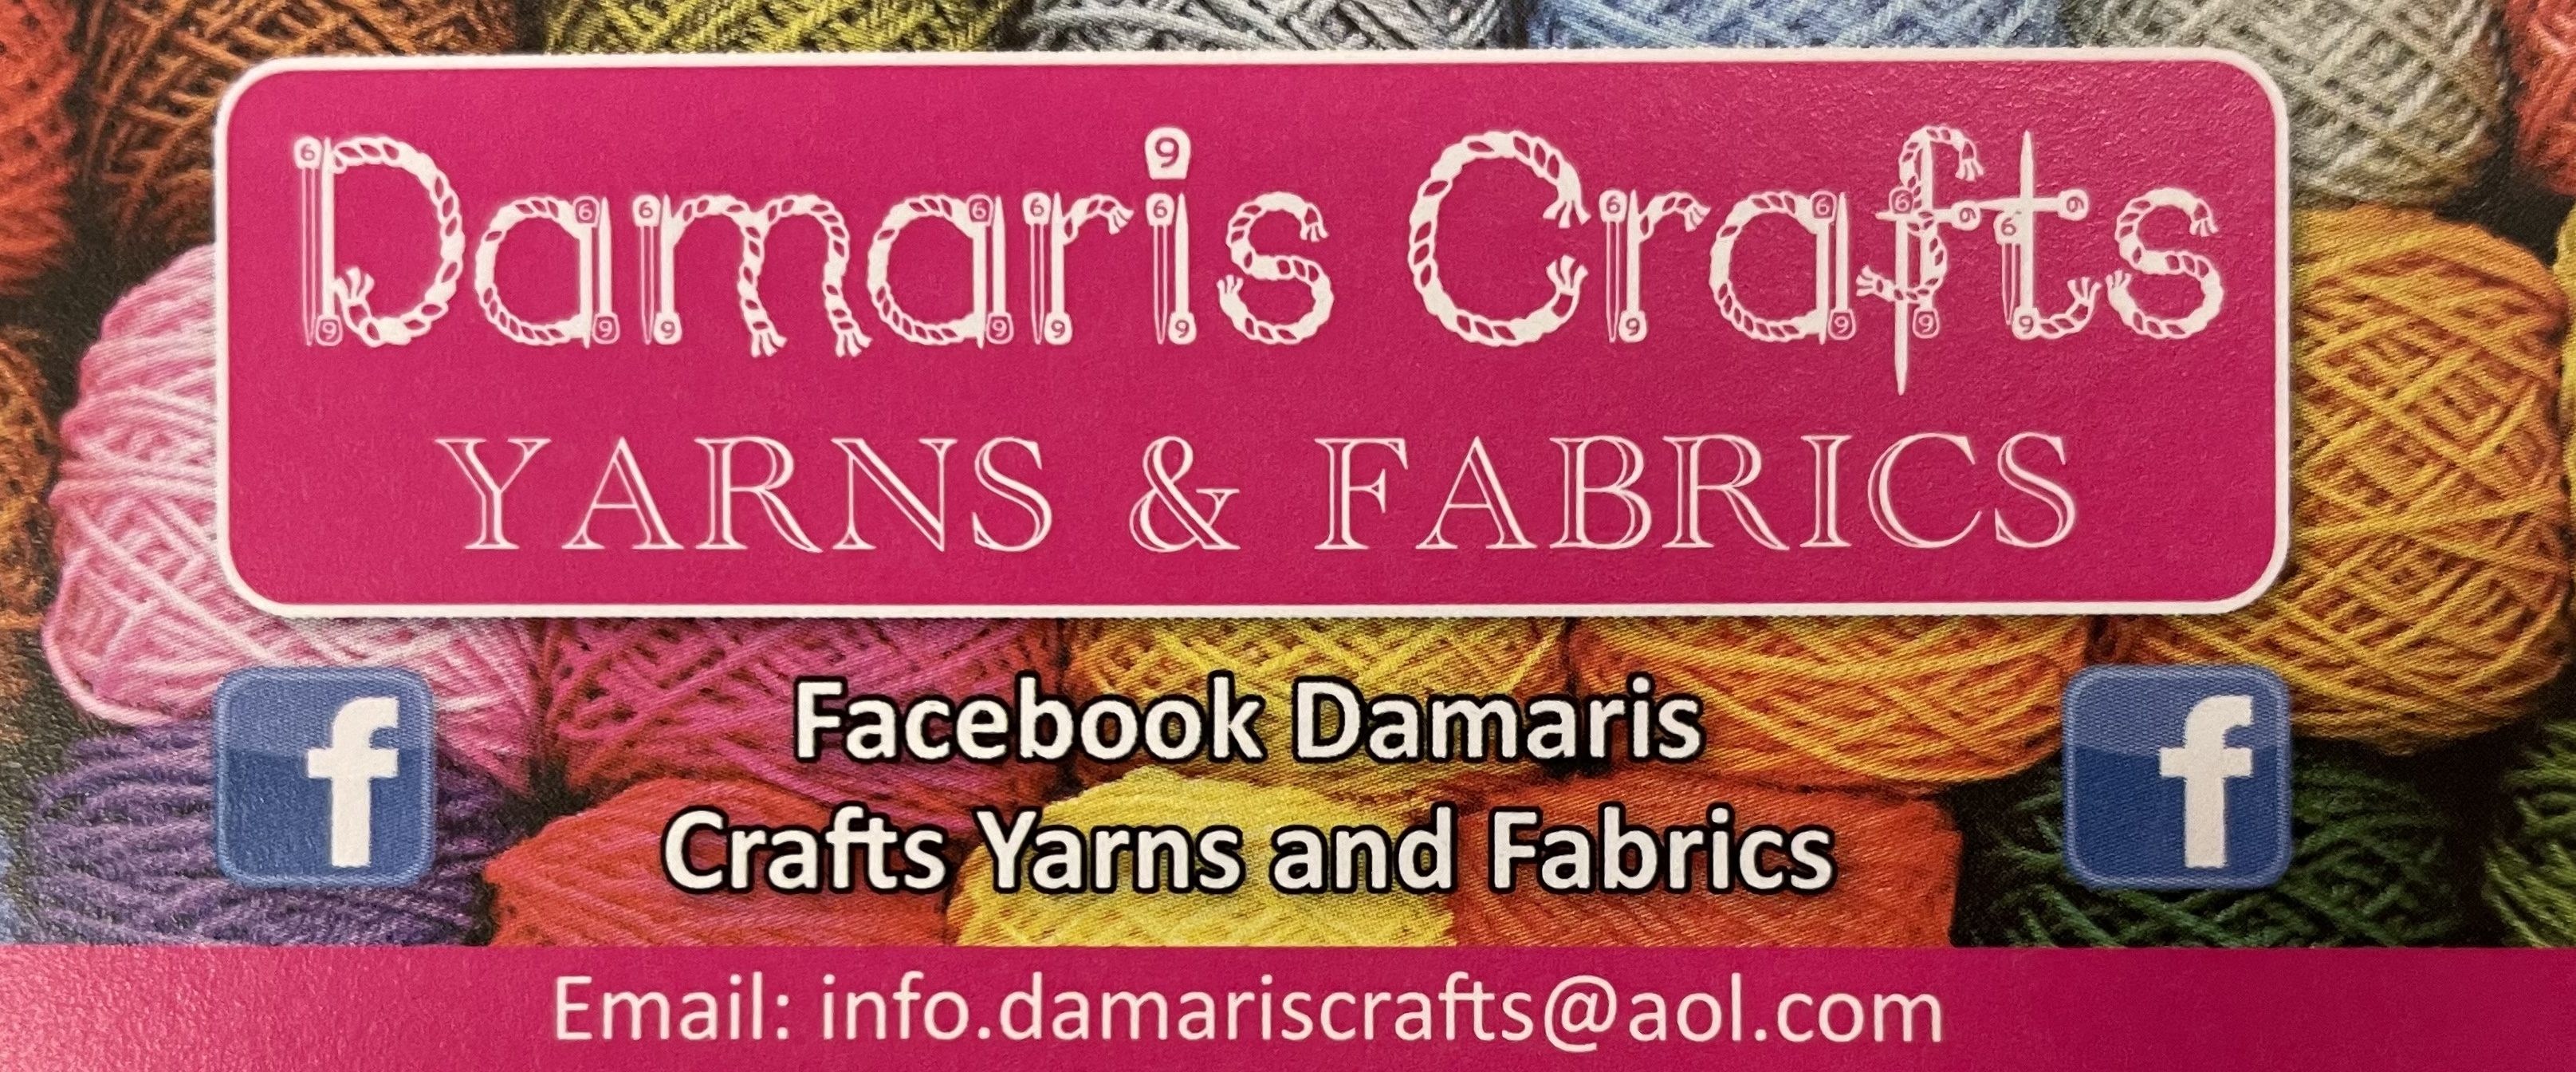 Damaris Crafts